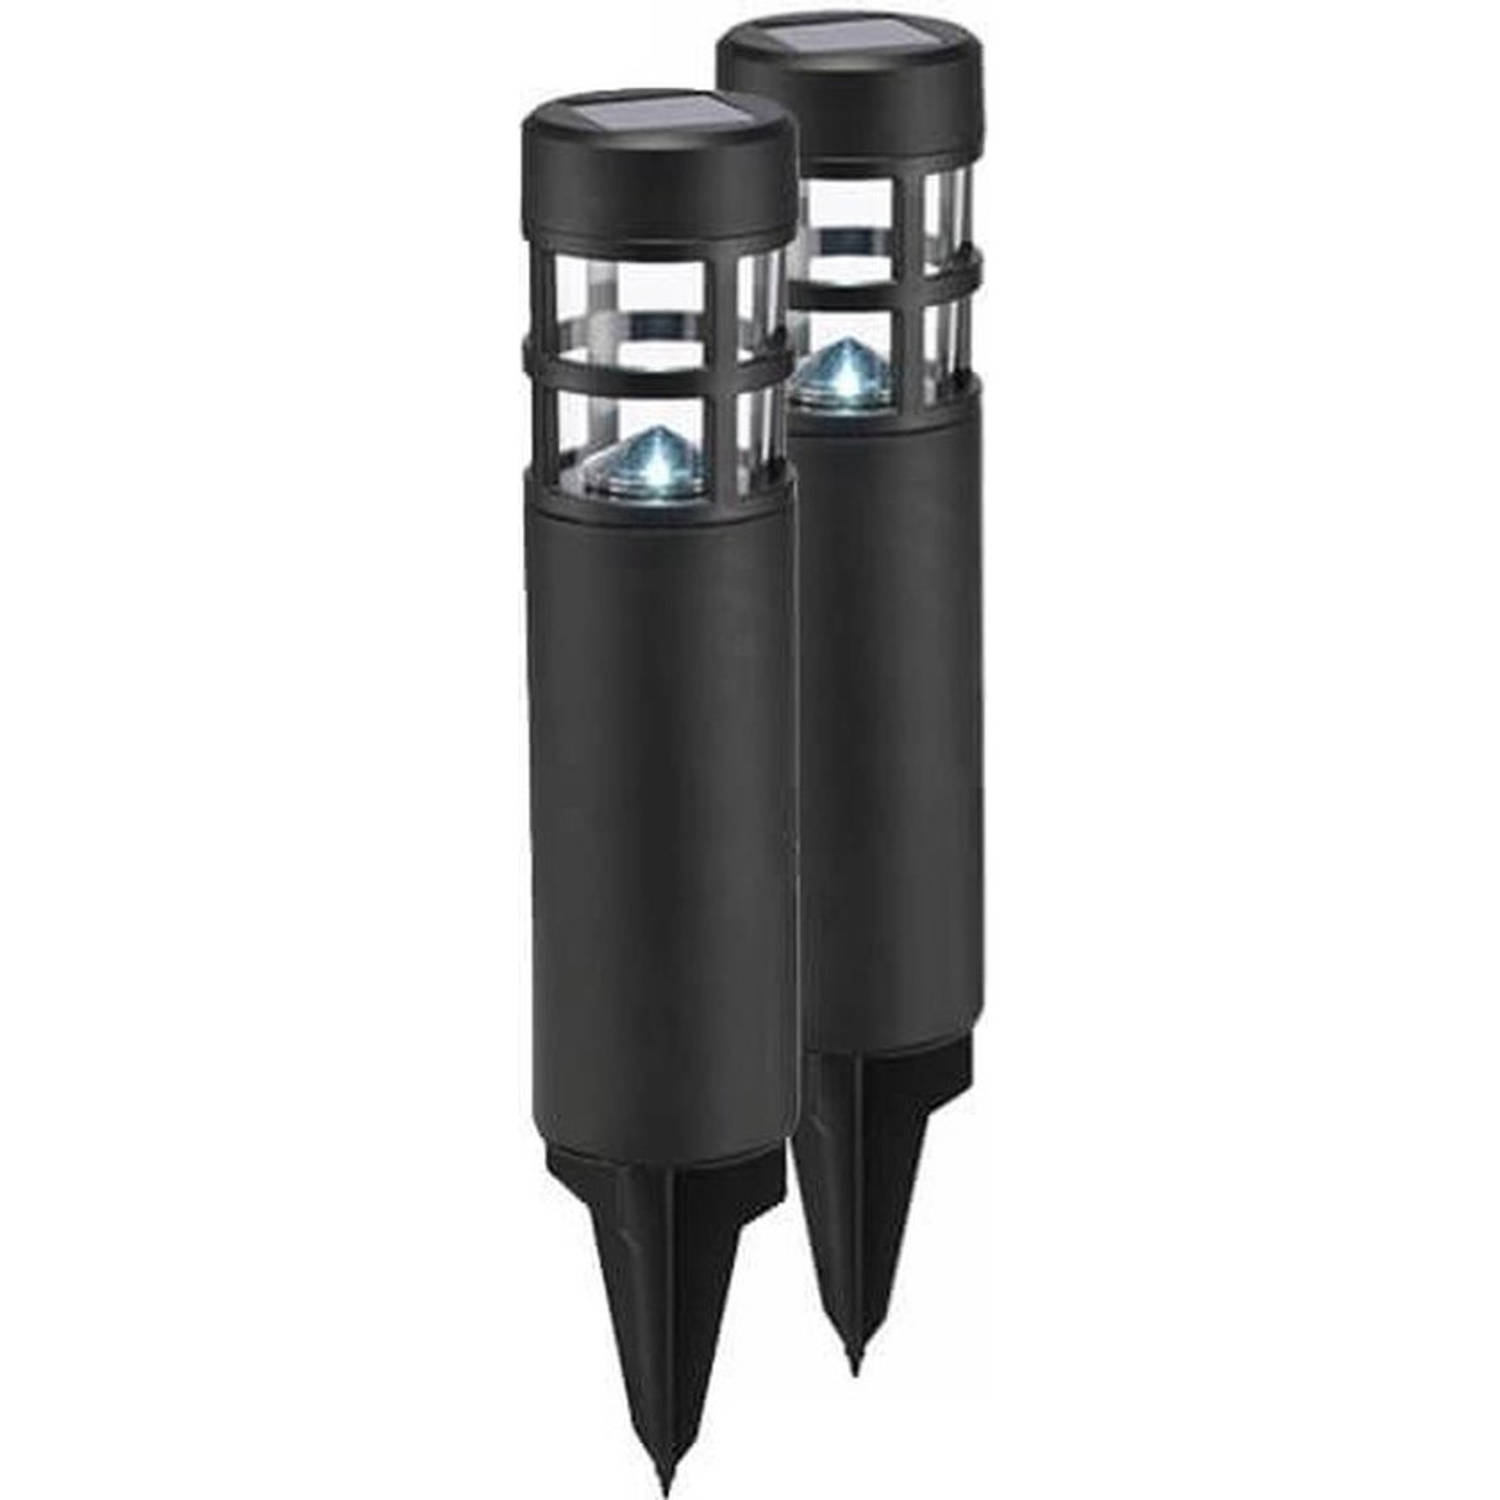 6x Buitenlampen/tuinlampen 39 cm zwart op steker - Prikspotjes